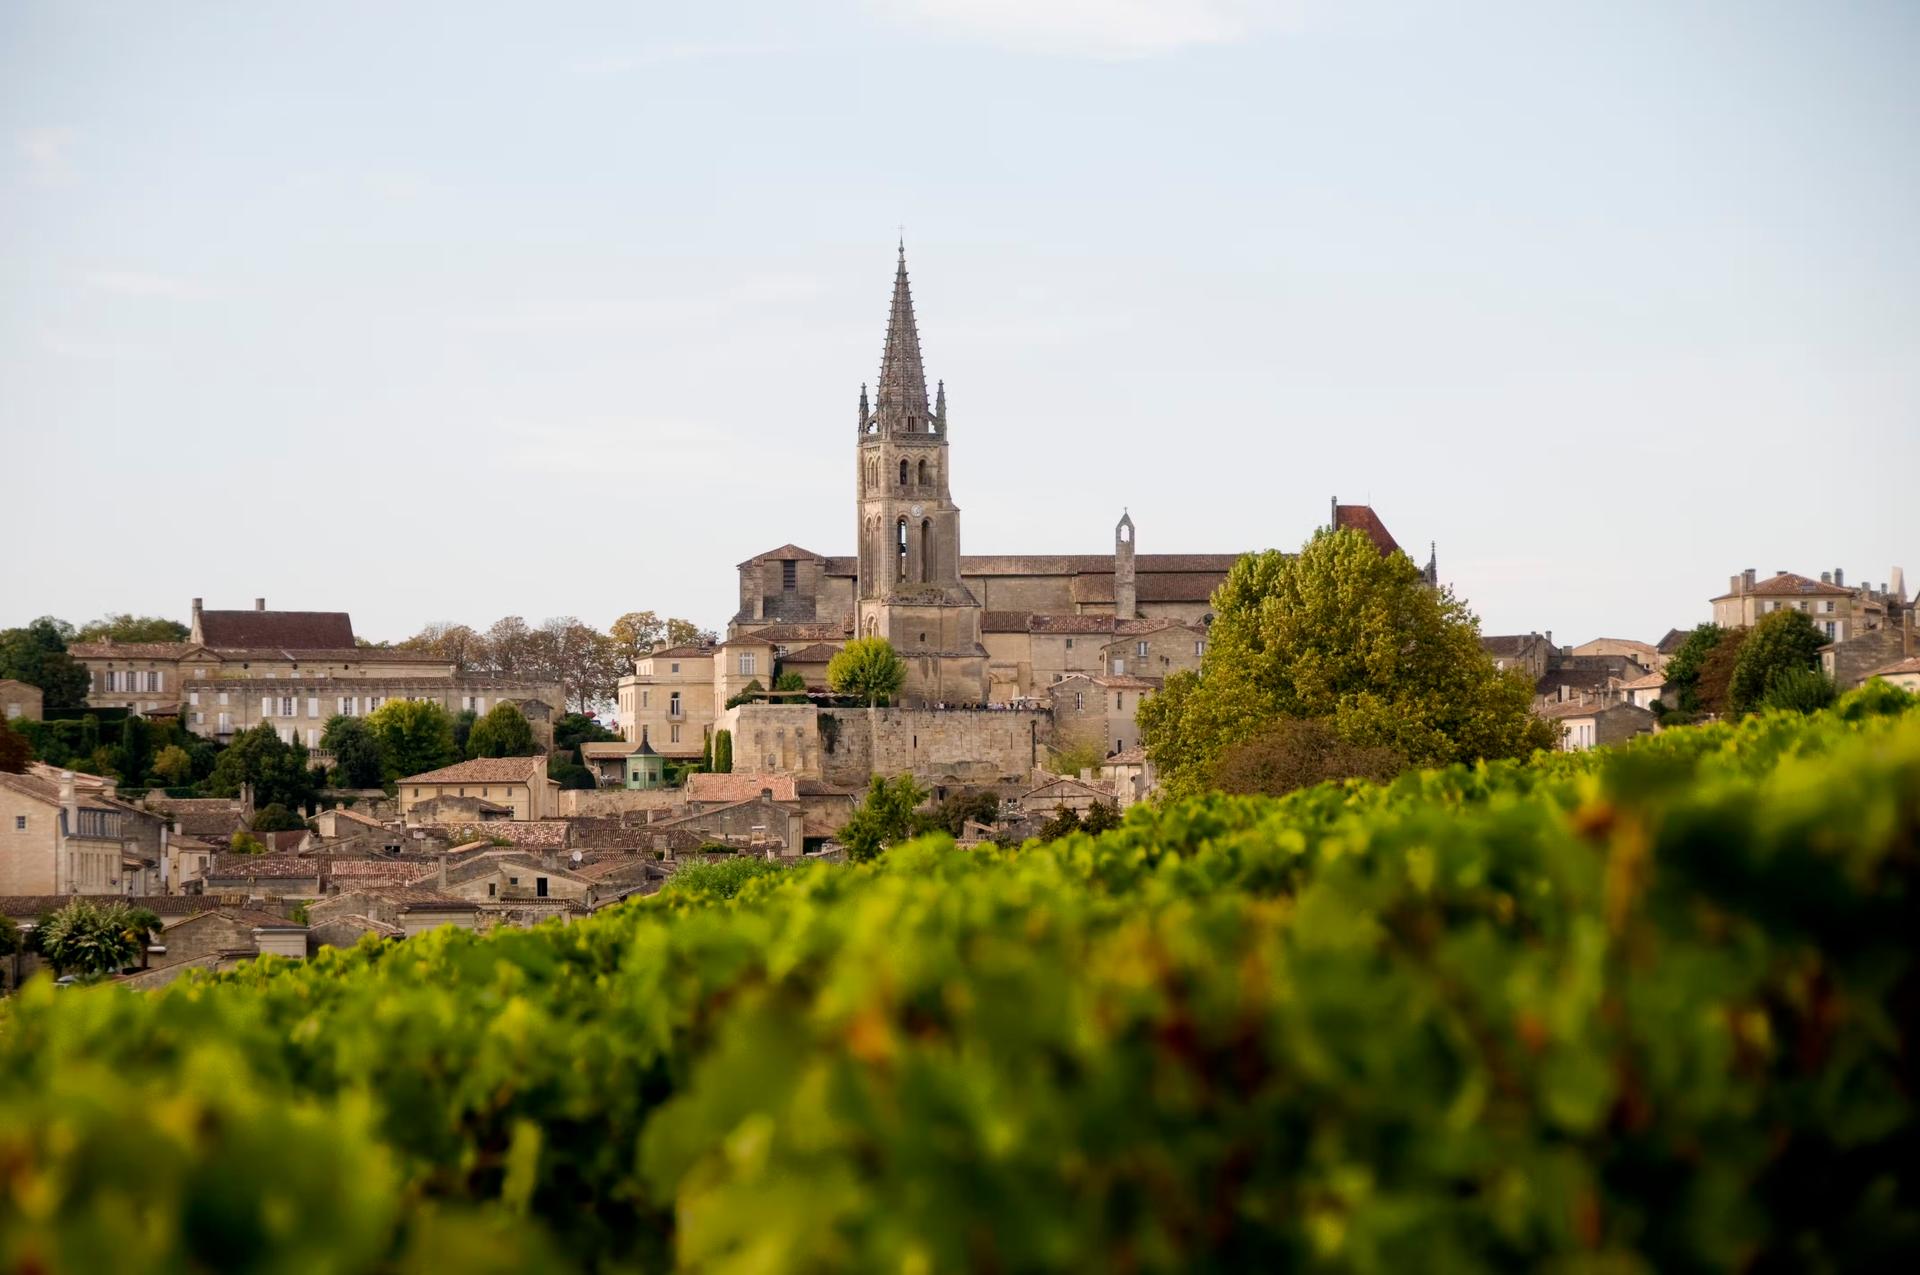 Spira av en katedral i den medeltida byn St-Émilion, Frankrike, reser sig över grönskan